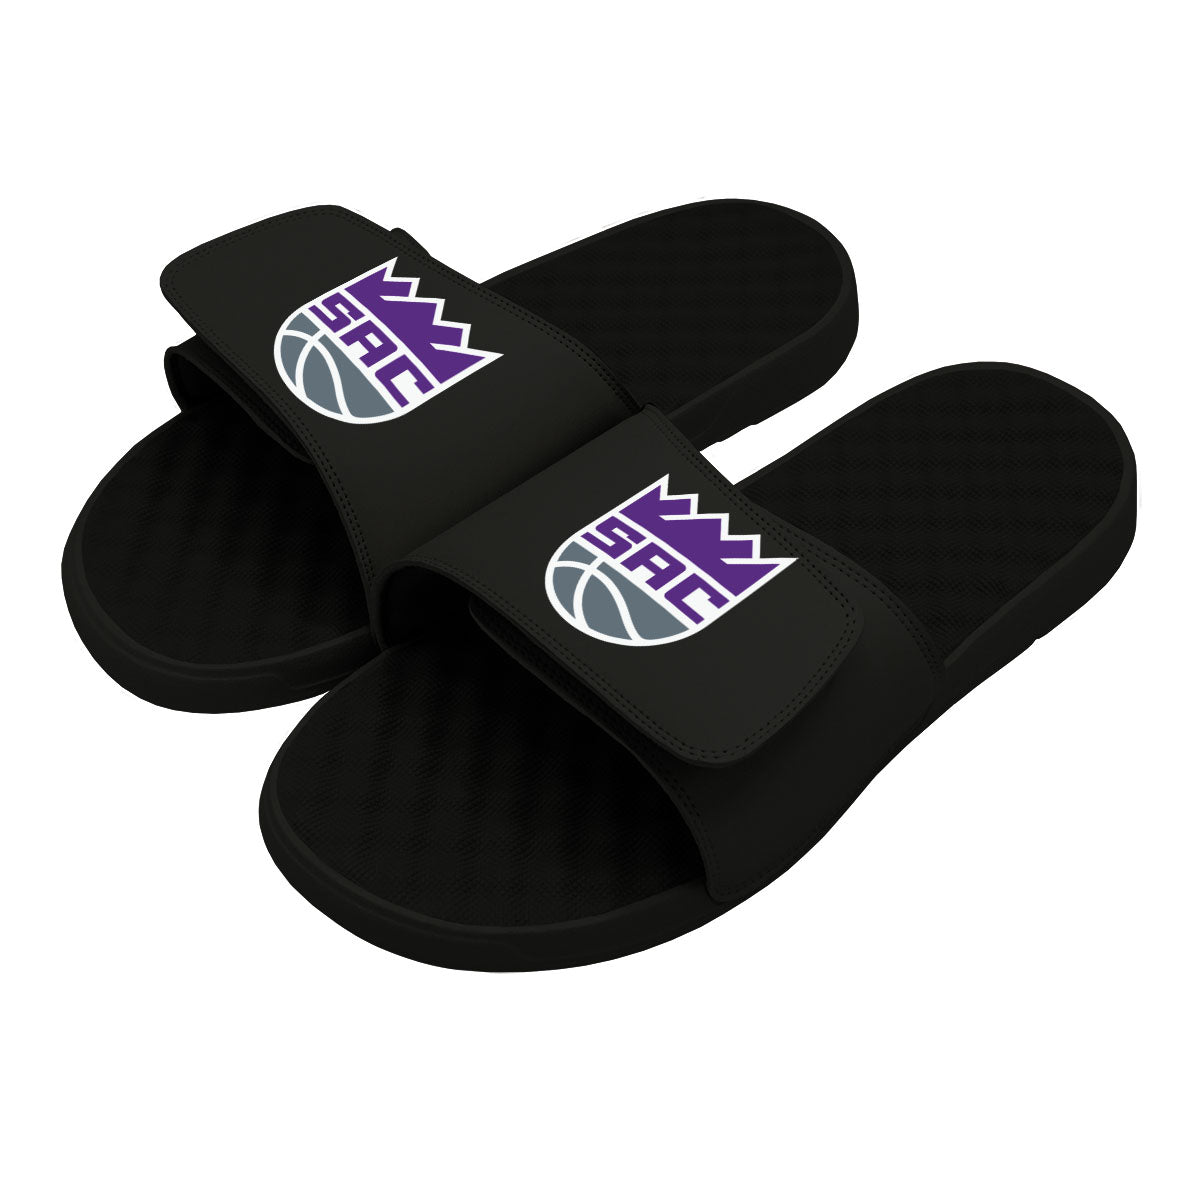 Lids Sacramento Kings ISlide Away Jersey Split Slide Sandals - Black